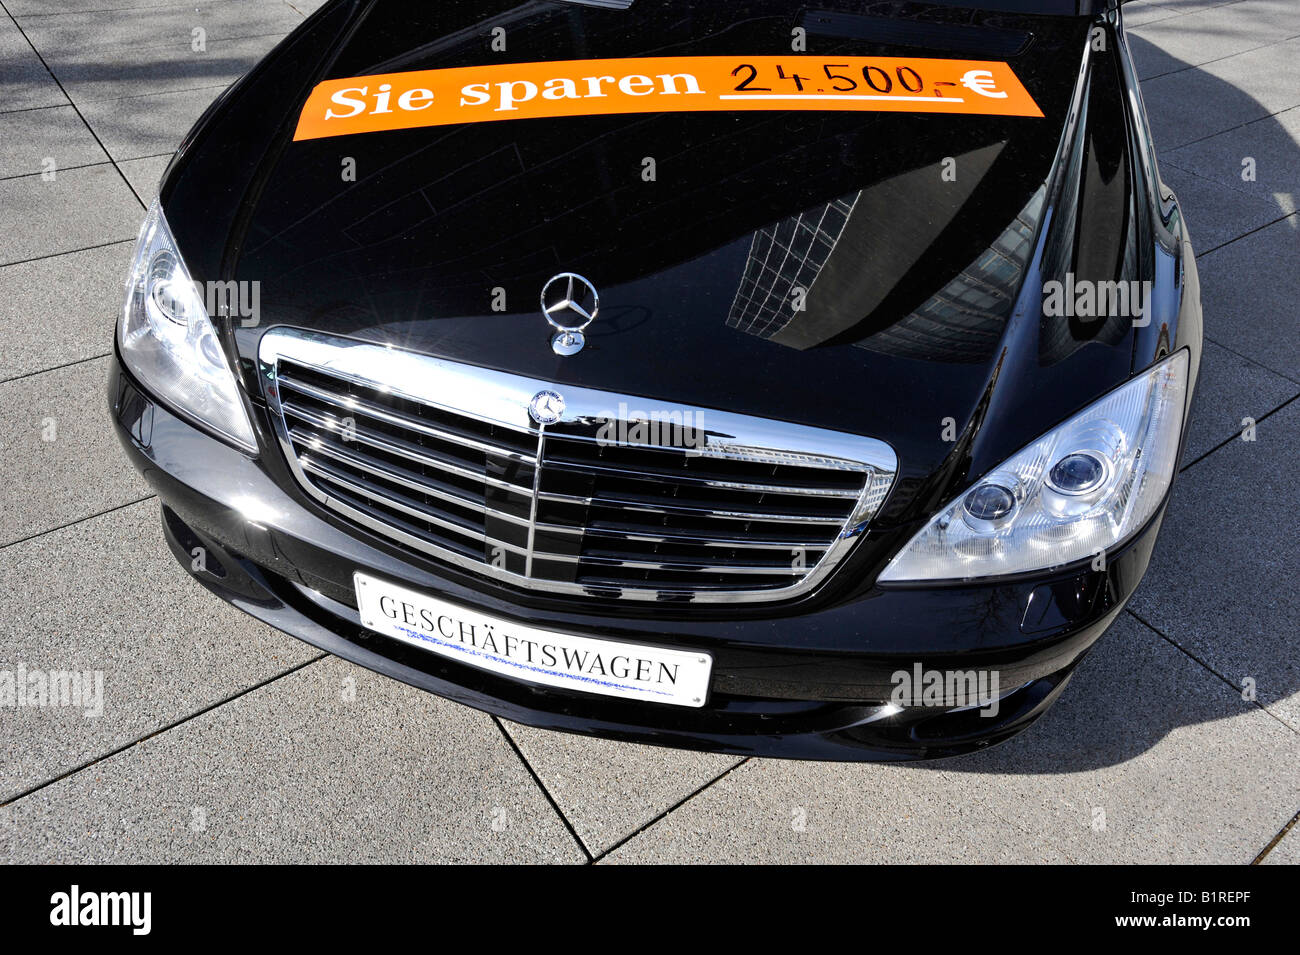 Daimler Mercedes Benz company car, sign reading Sie sparen 24.500Ae, you save 24, 500 Euros, Munich, Bavaria, Germany, Europe Stock Photo